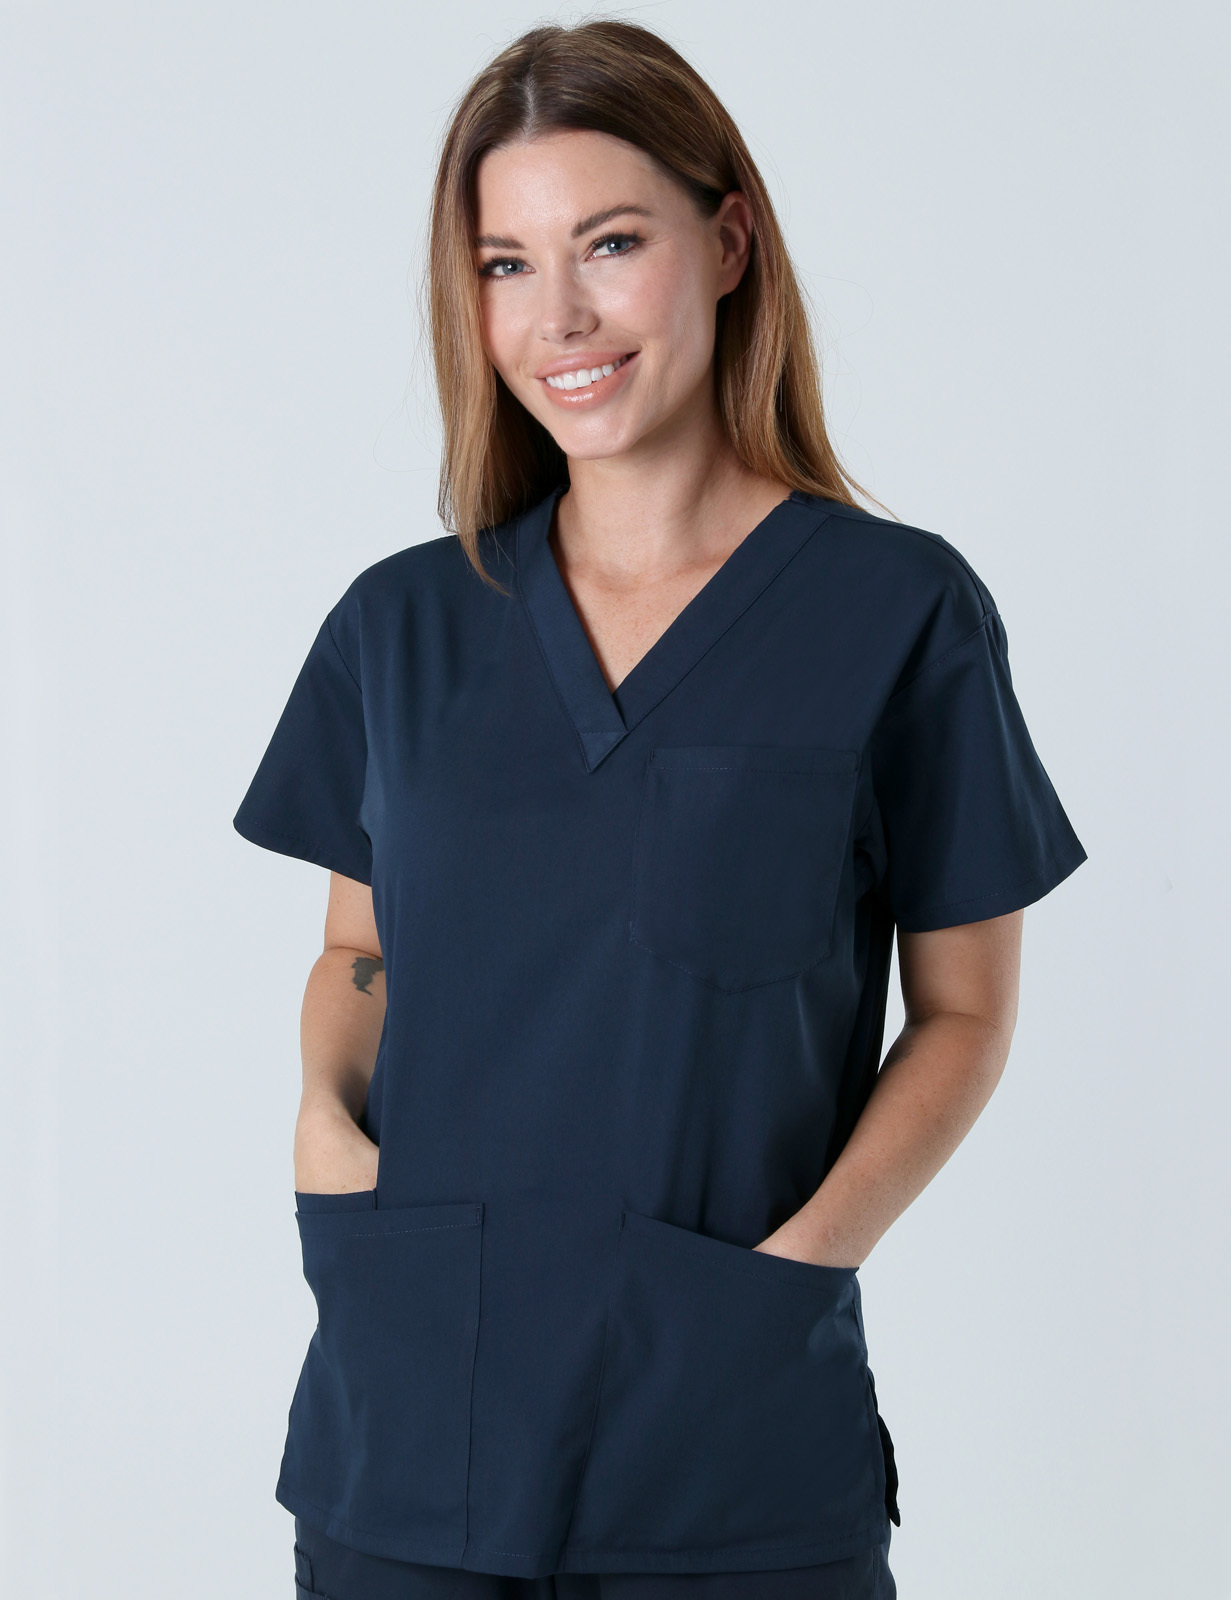 Monash Health Women's Midwife  Uniform Set Bundle (4 Pocket Top and Cargo Pants in Navy + Logo)